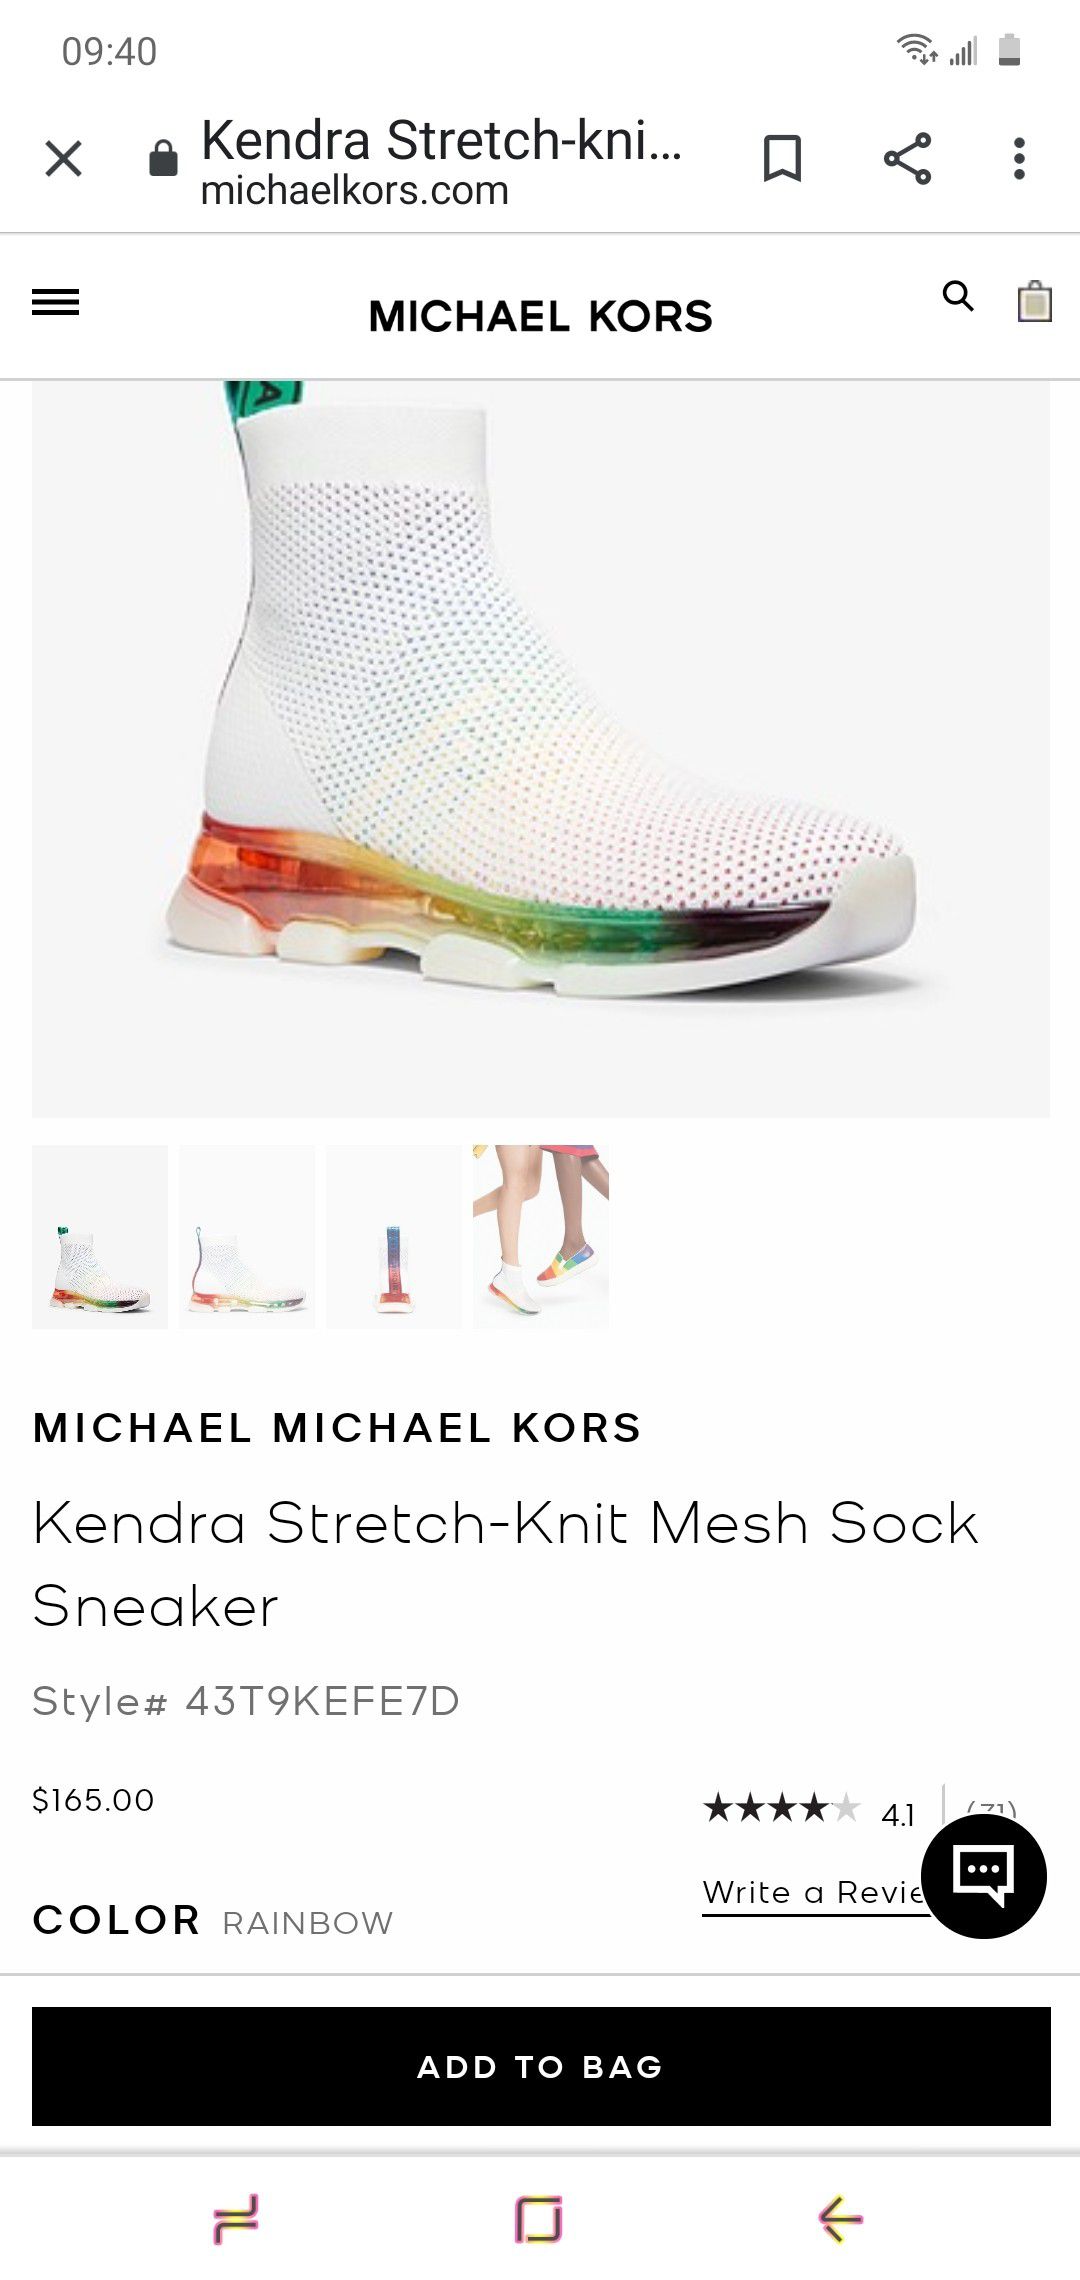 MICHAEL KORS Stretch-Knit Mesh Sock Sneaker